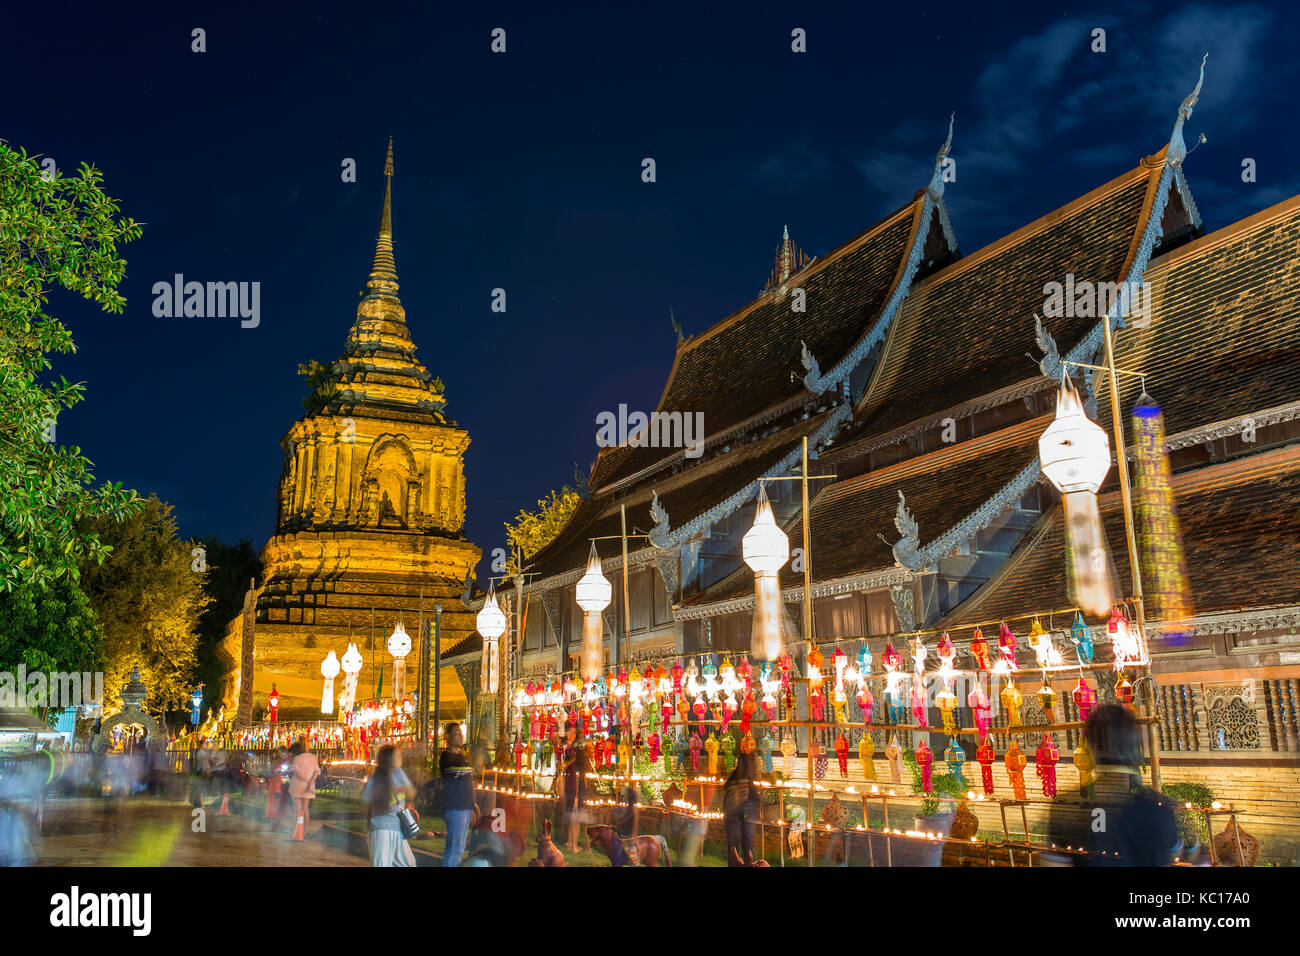 Yi Peng festival in Wat  Phan Tao Temple in Chiang Mai, Thailand Stock Photo